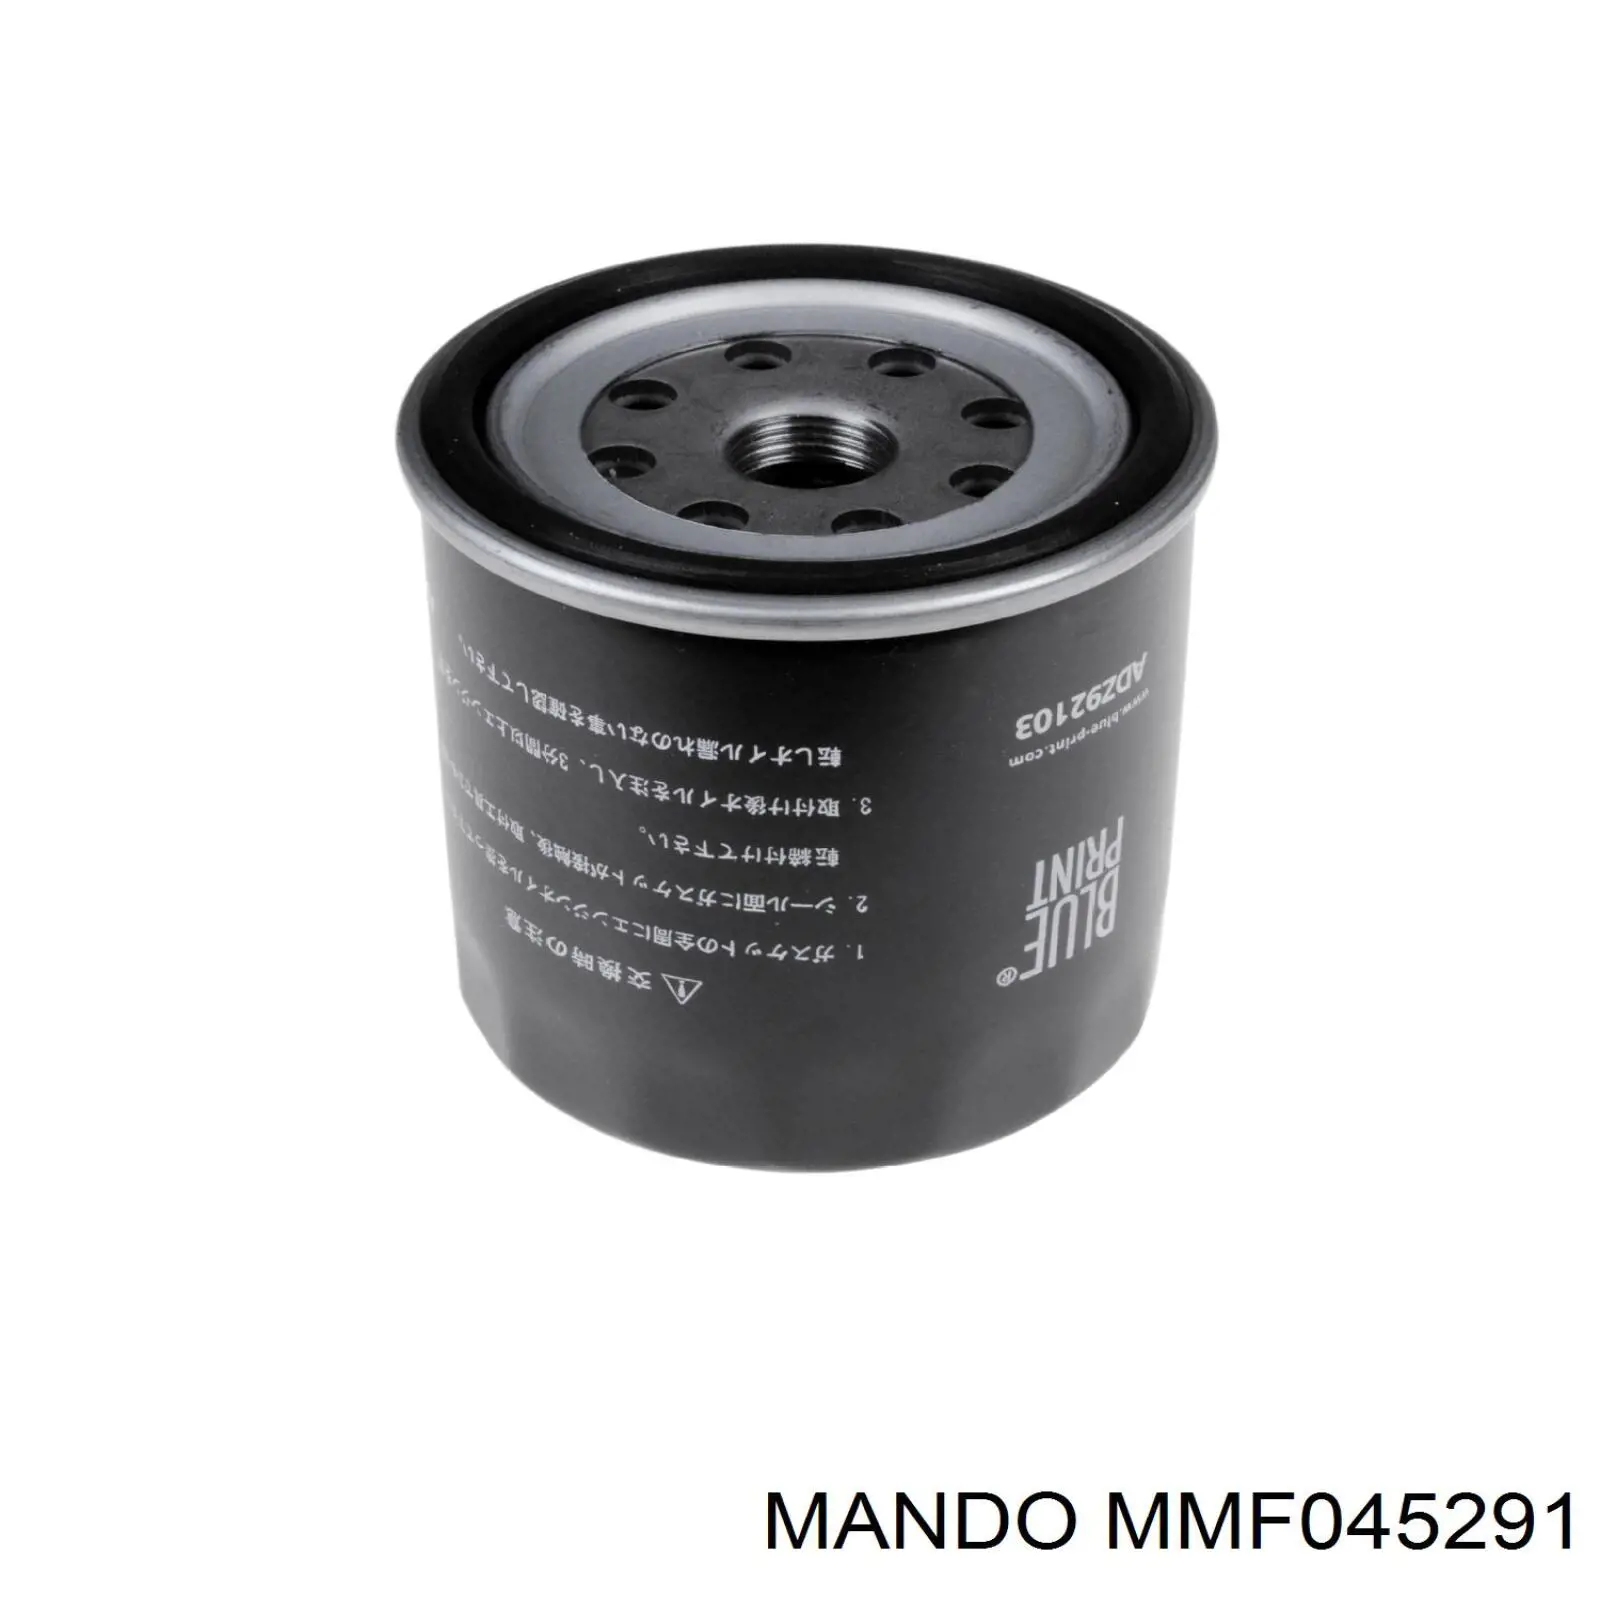 MMF045291 Mando масляный фильтр